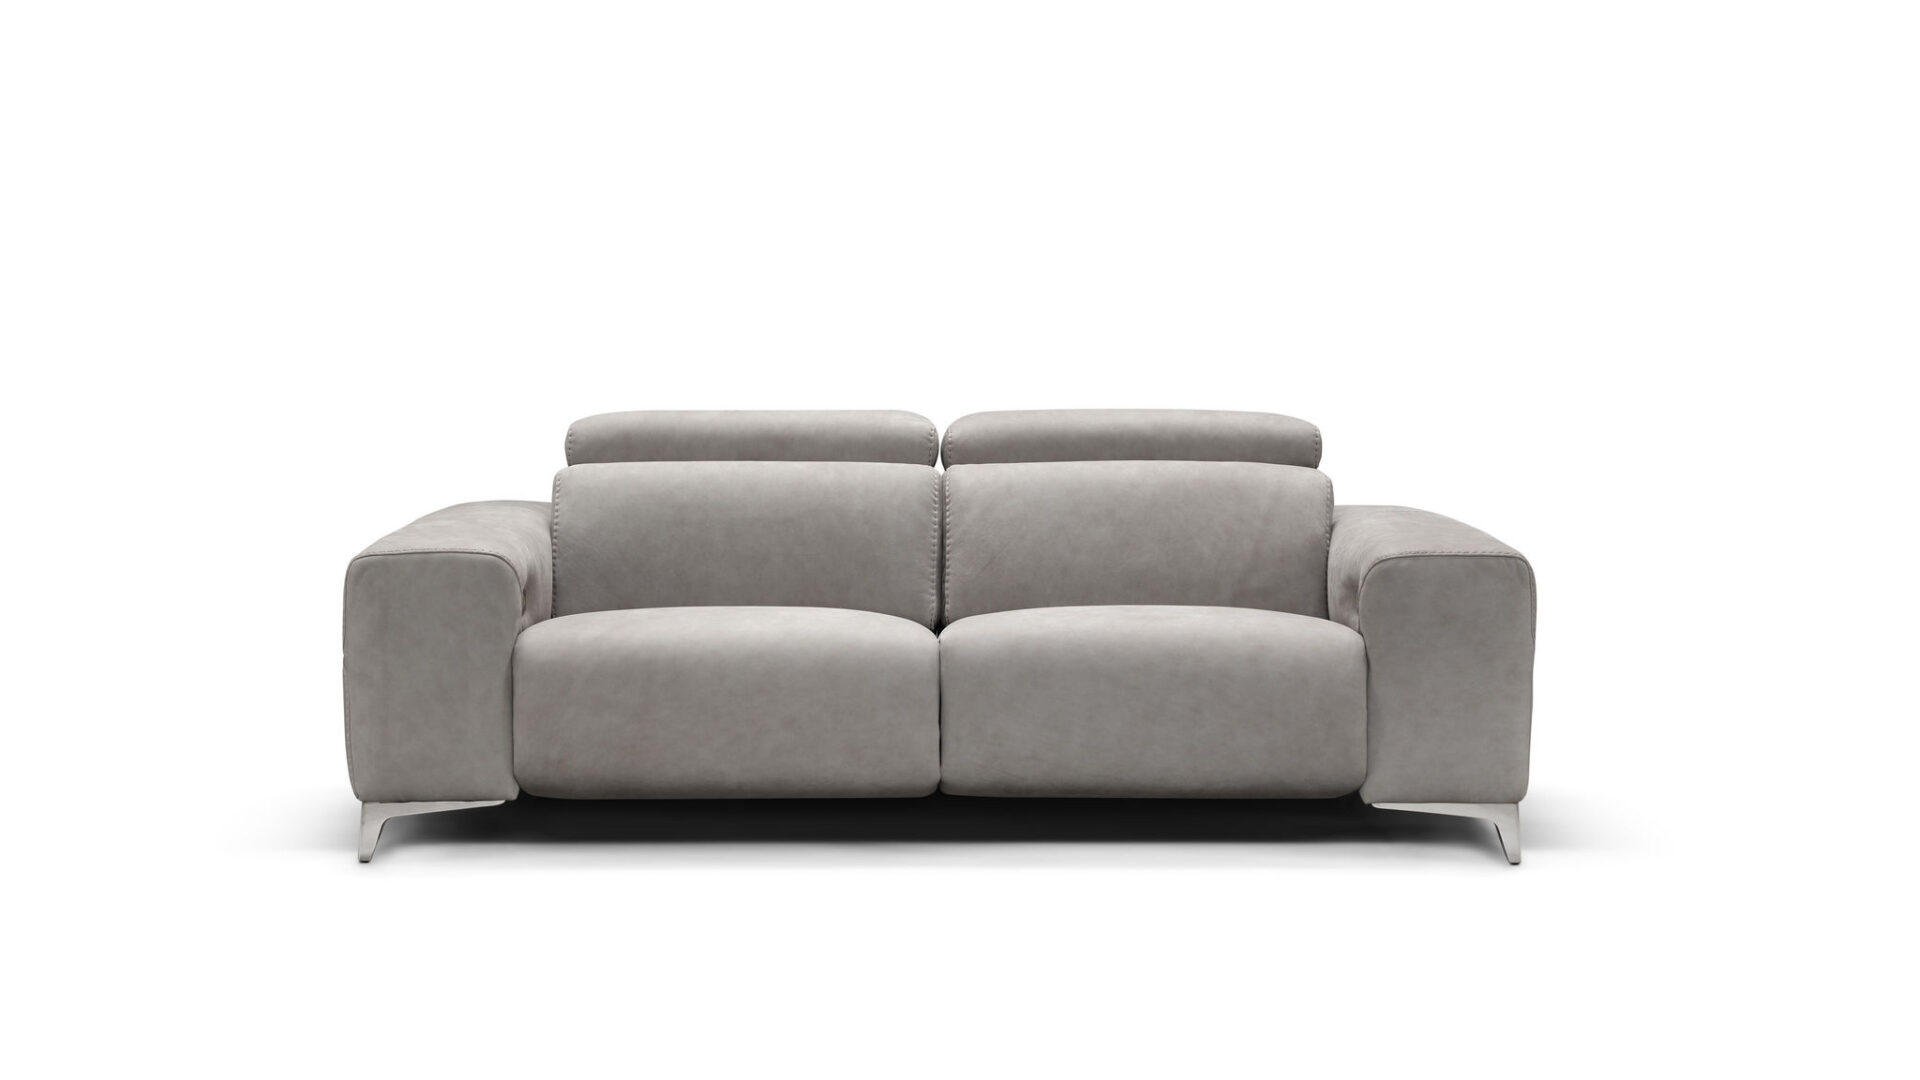 1 - Iride sofa